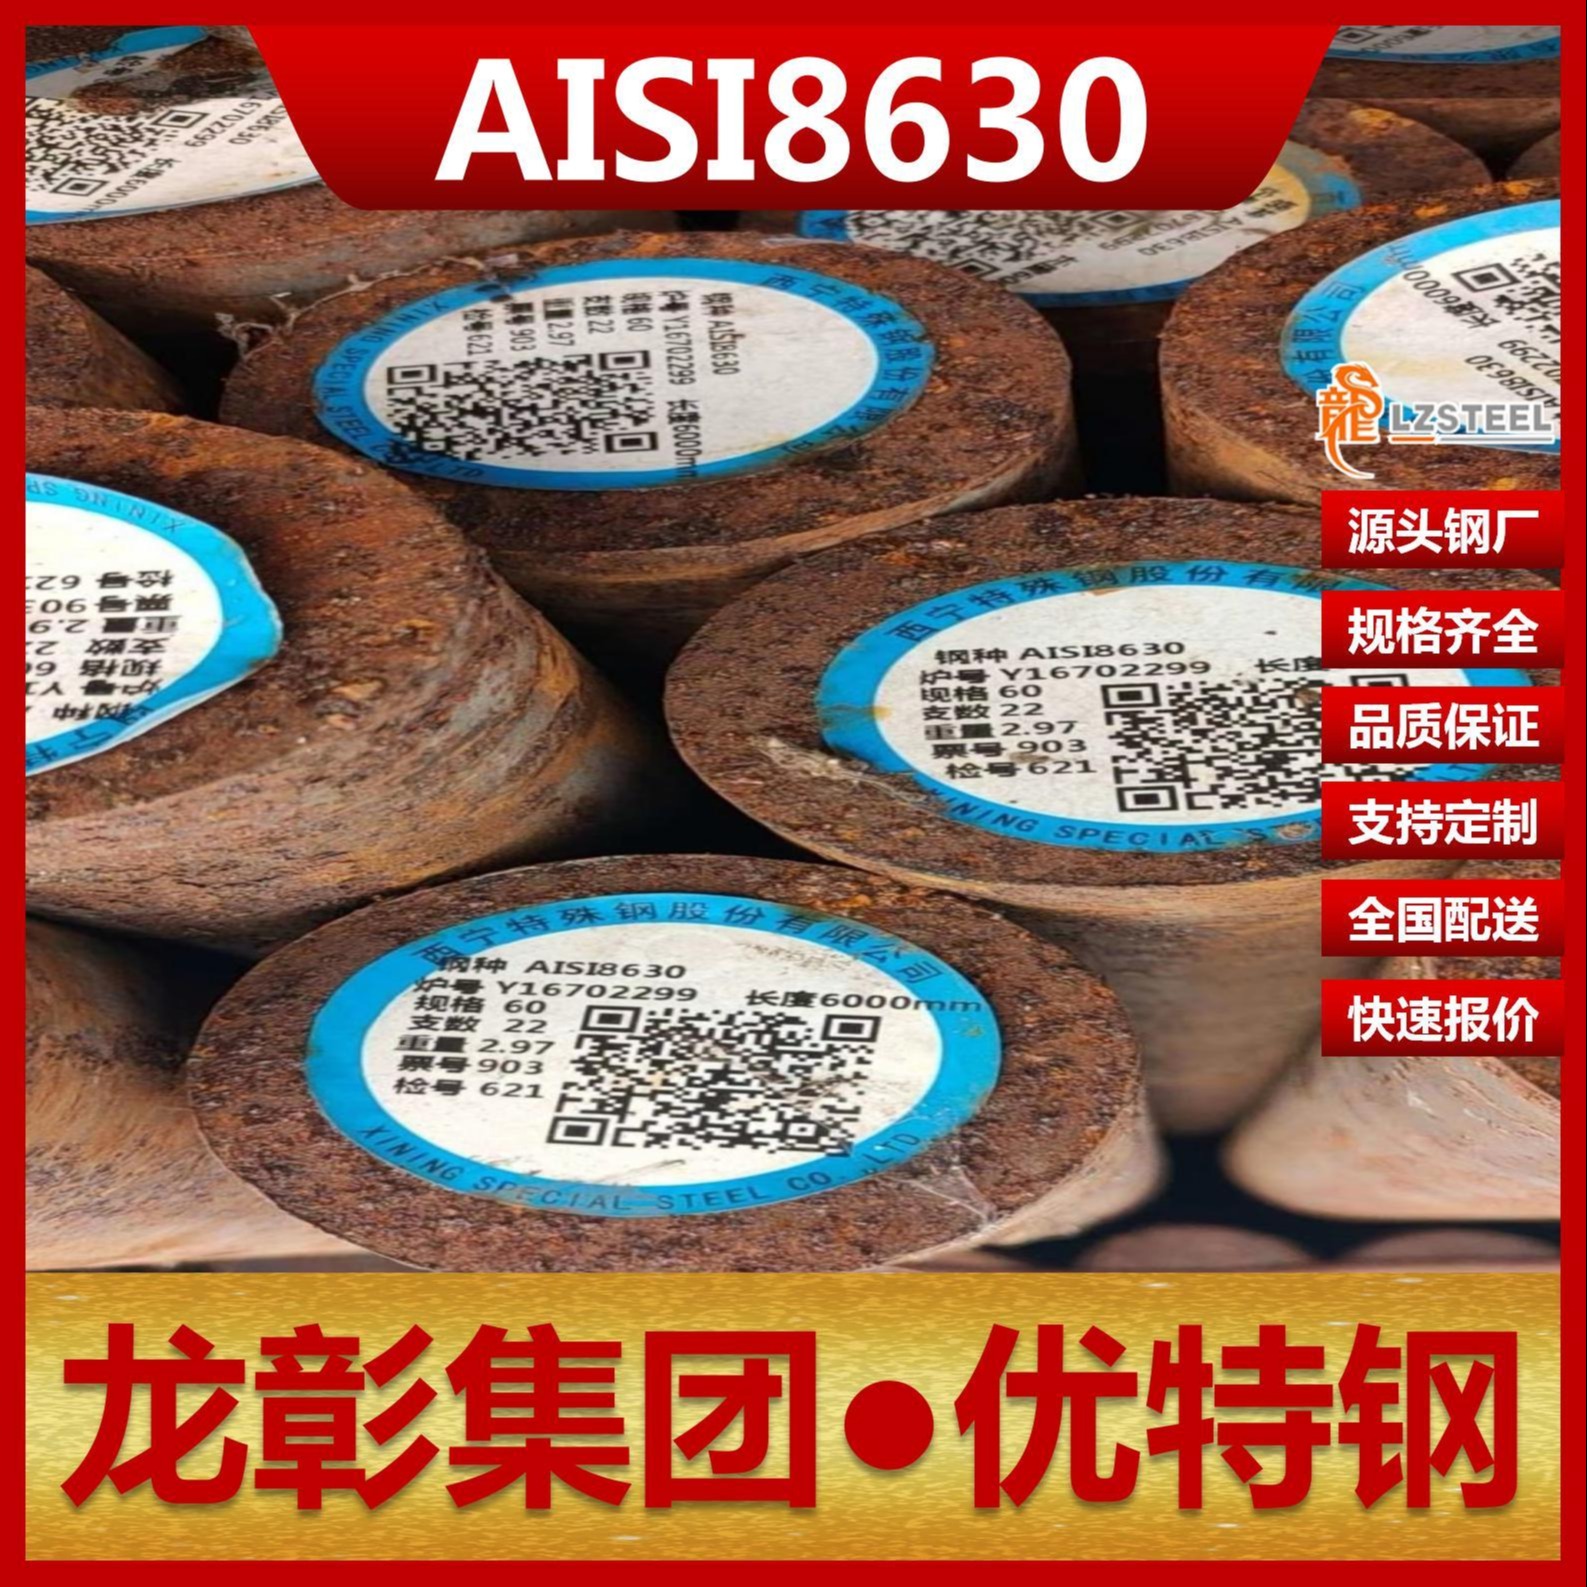 AISI8630圆钢现货批零 龙彰集团主营AISI8630圆钢棒支持定制合金钢锻件